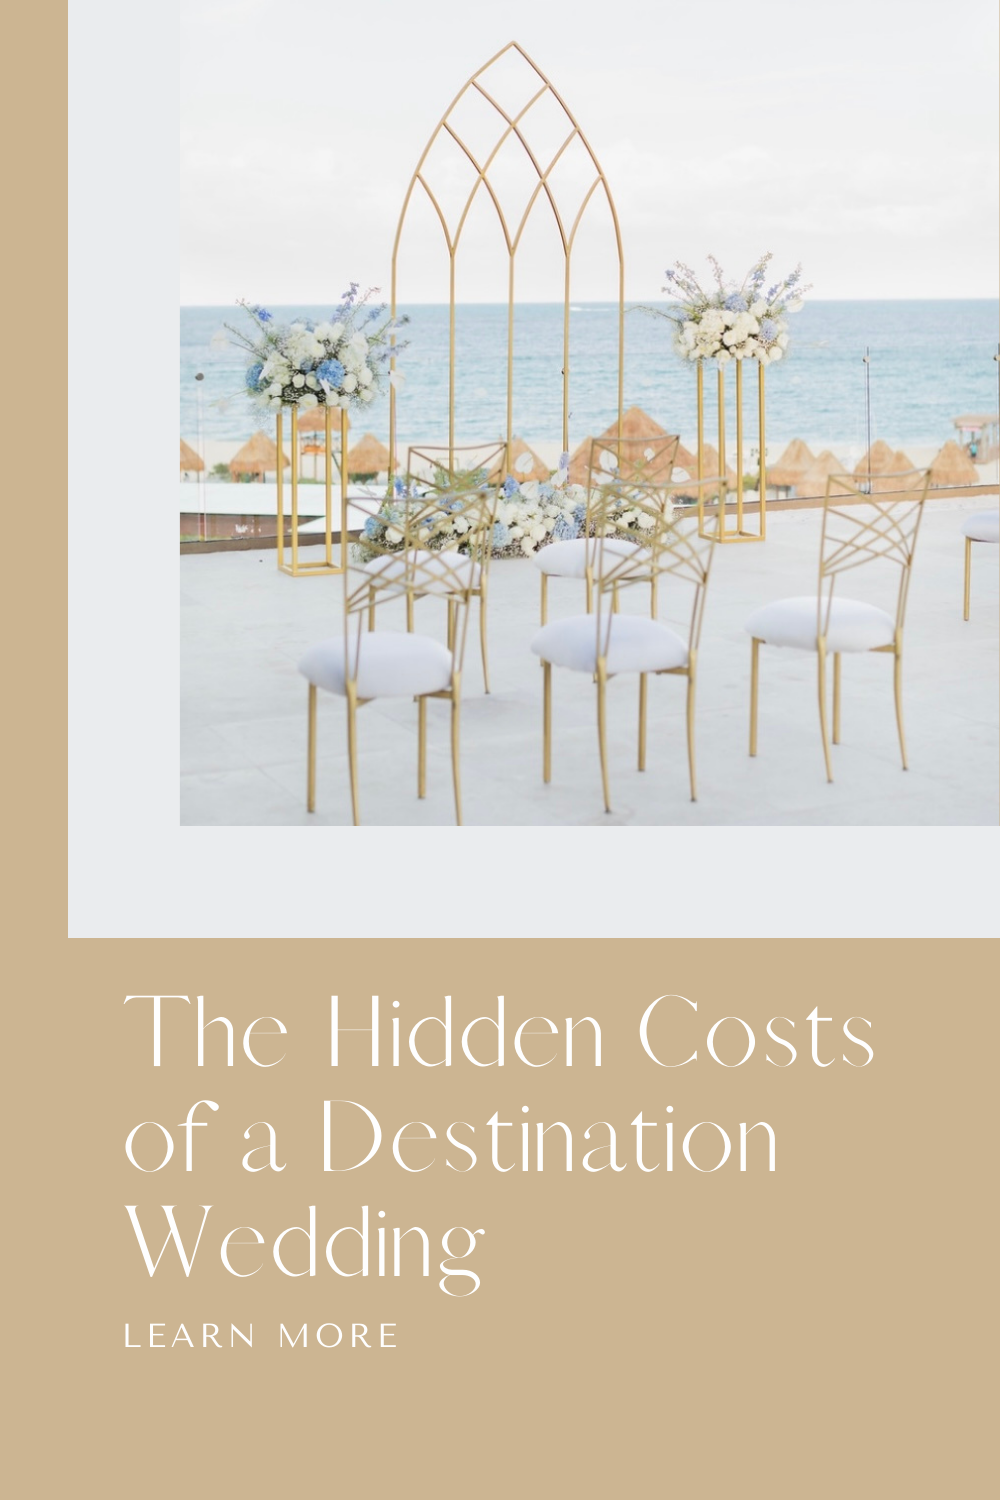 costs of a destination wedding